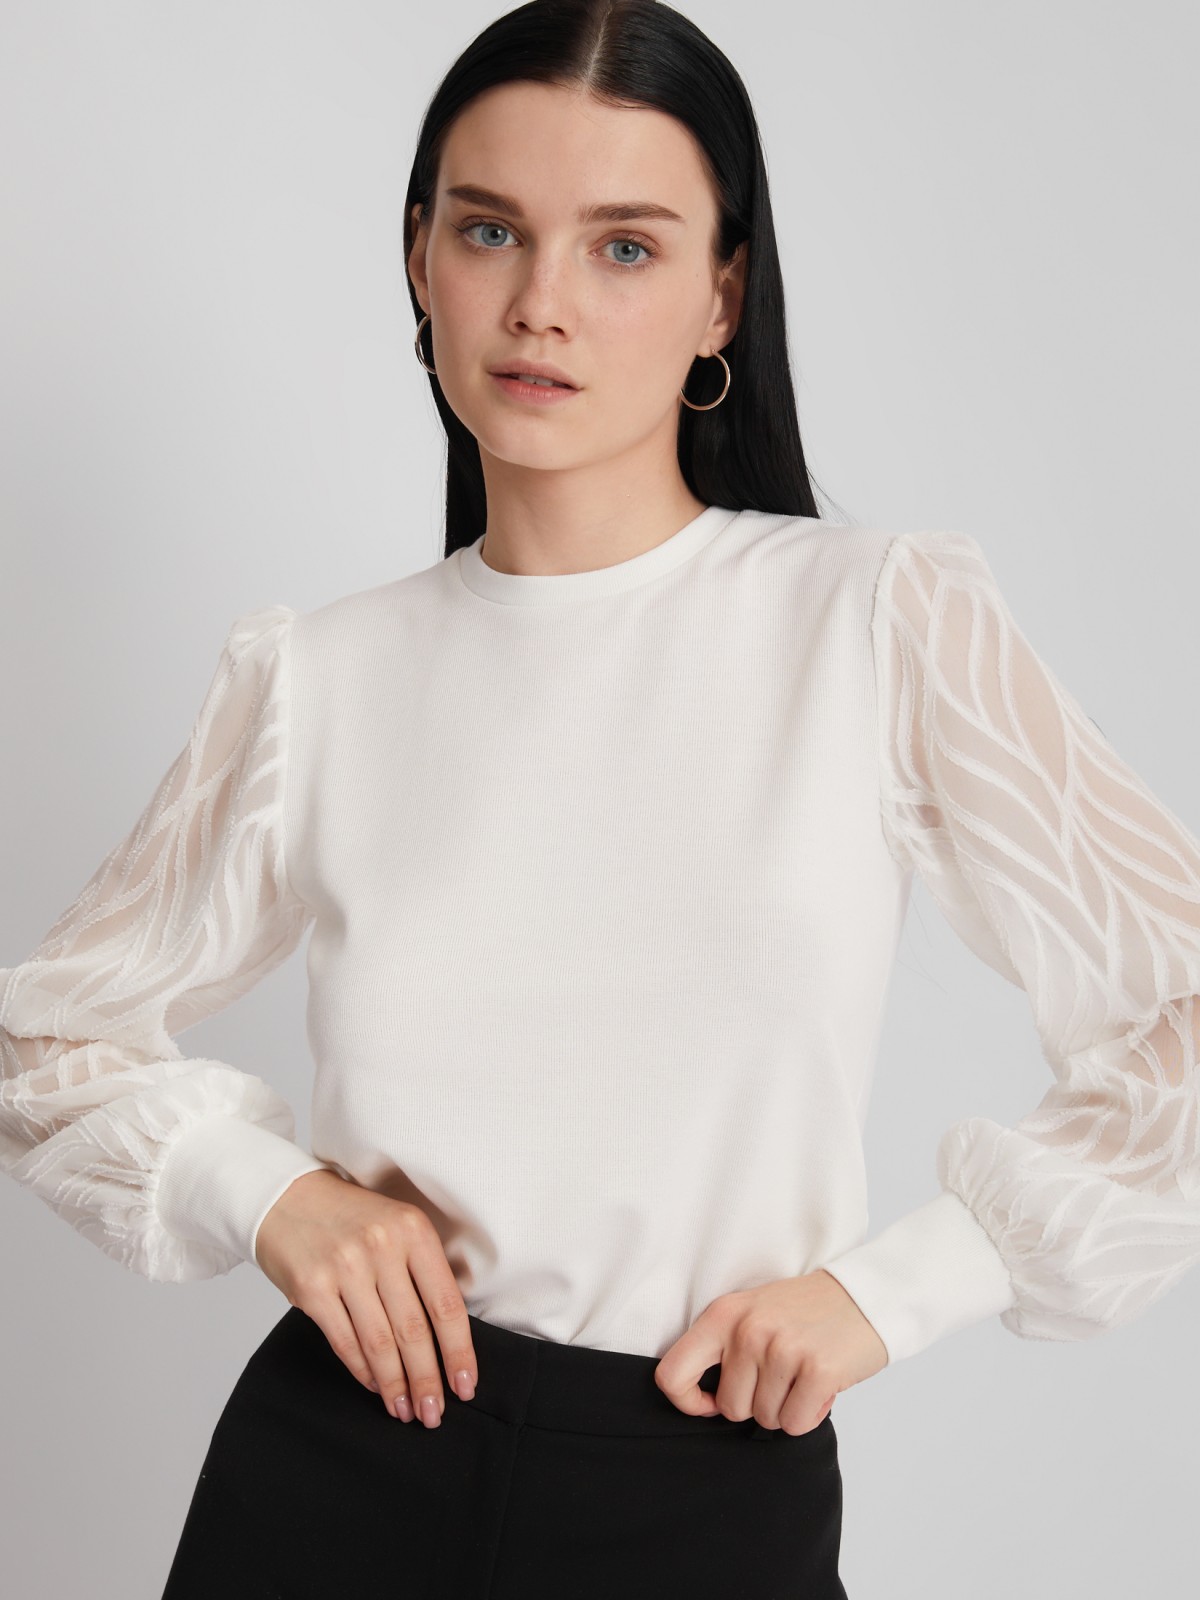 Топ-блузка с акцентными рукавами zolla 223313126132, цвет белый, размер M - фото 1